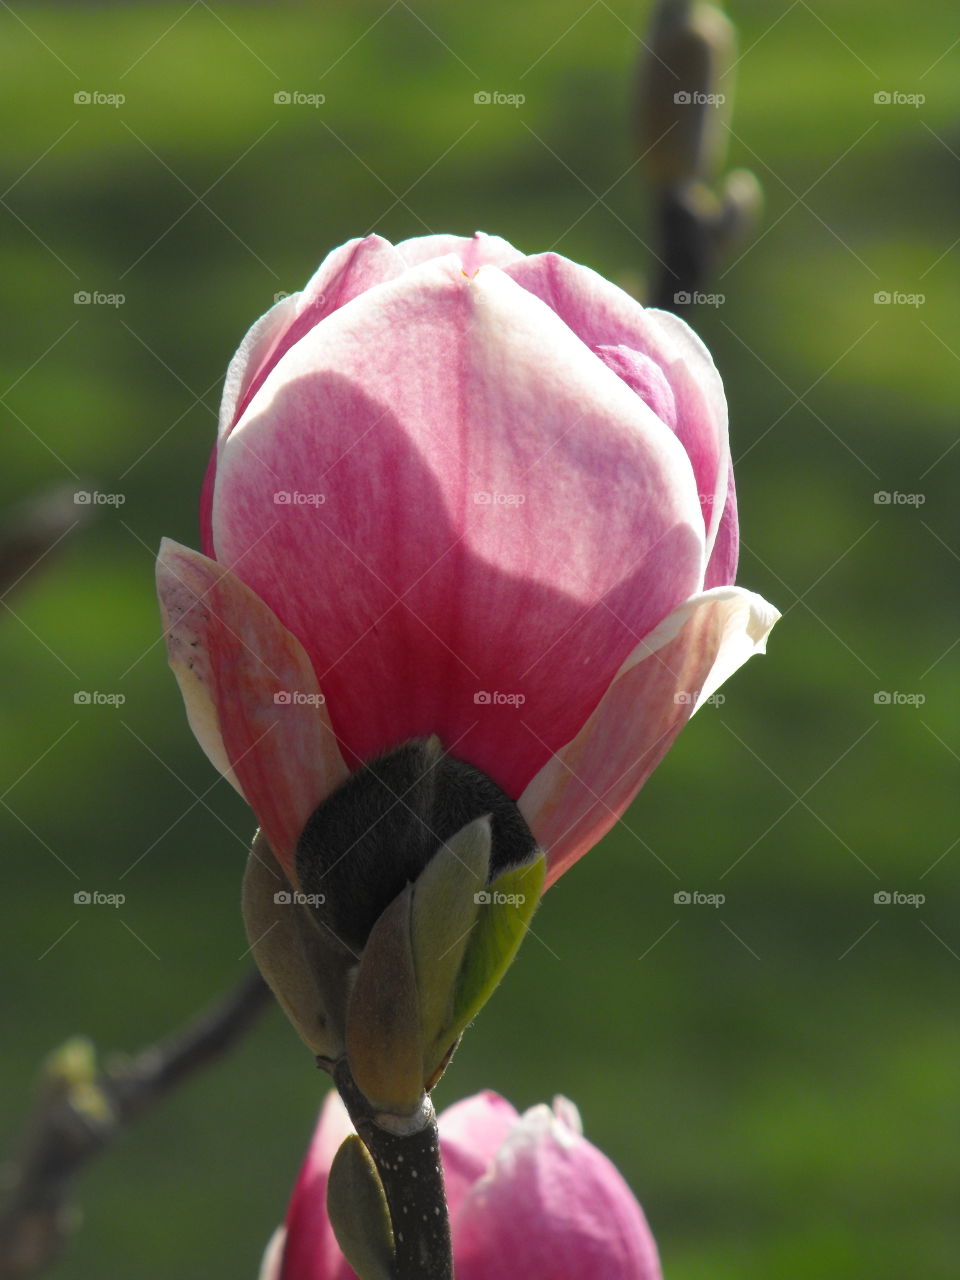 A pink spring magnolia flower